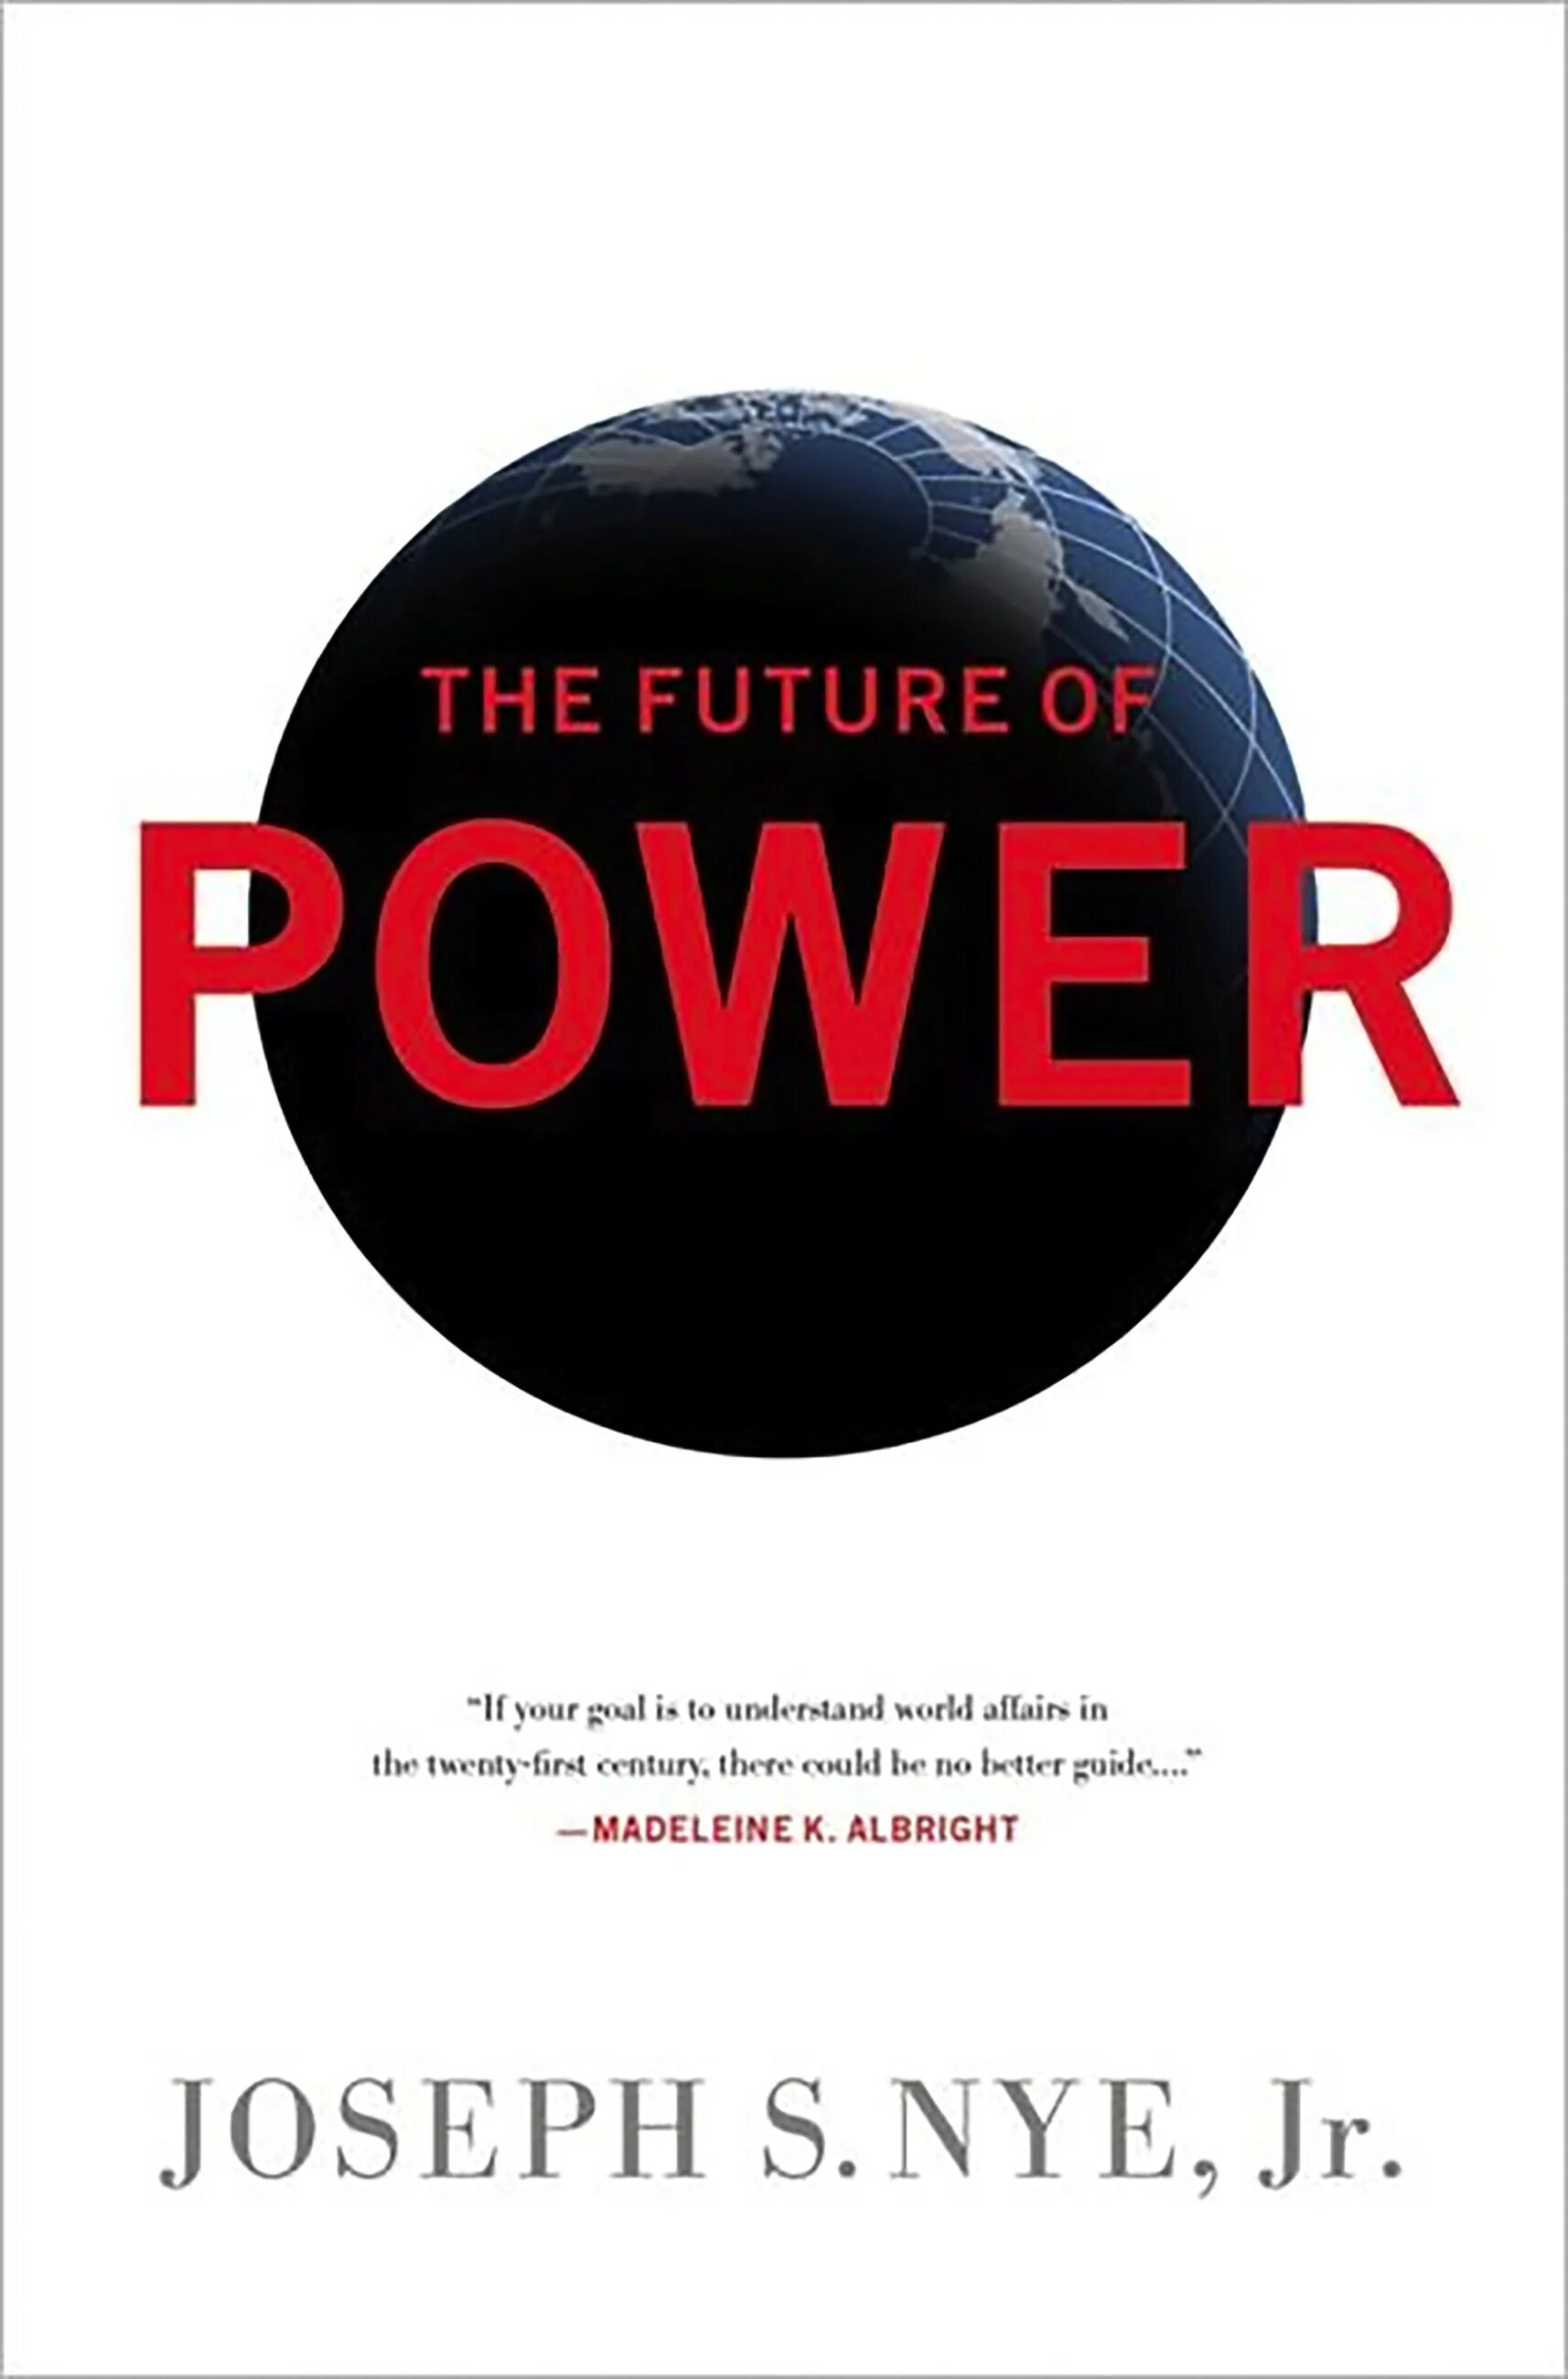 Future powers. The Future of Power’ nye. Soft Power Joseph nye.